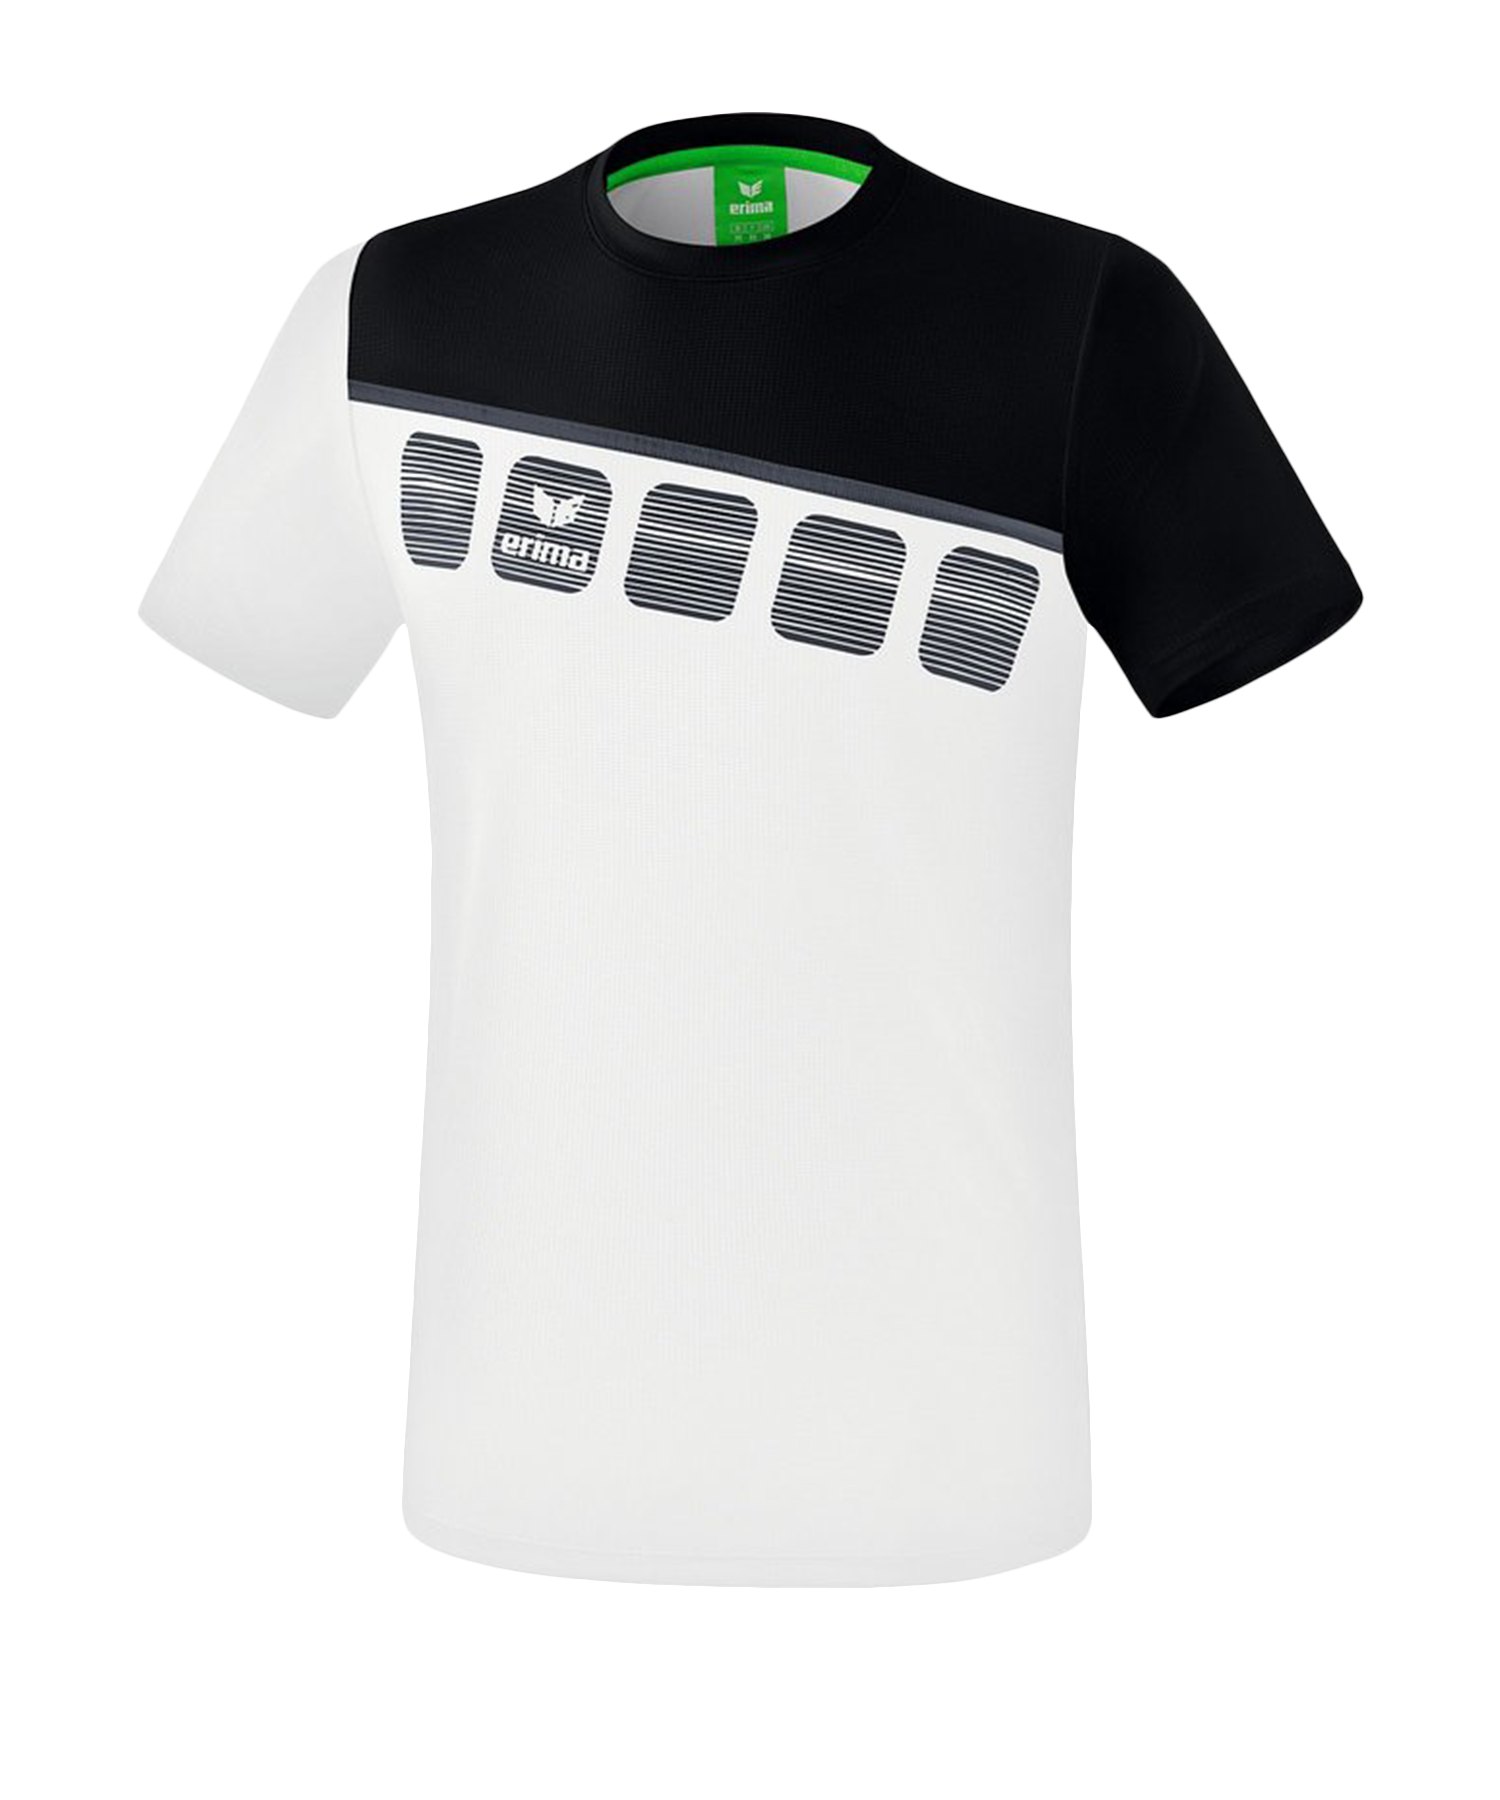 Erima 5-C T-Shirt Weiss Schwarz - Weiss